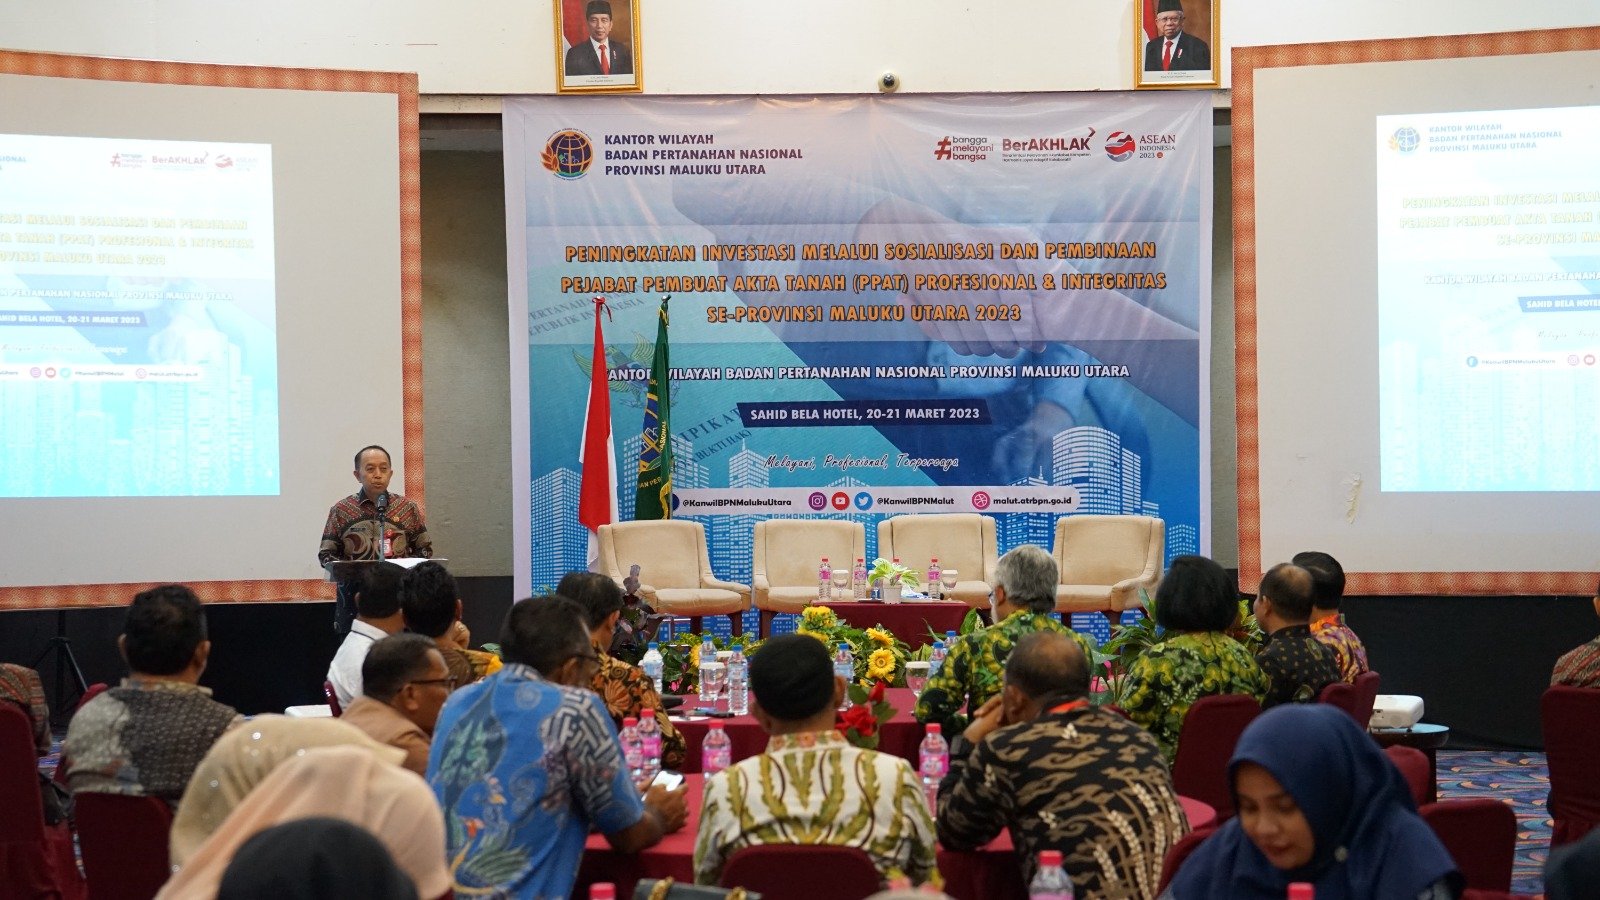 Terobosan Baru, PP IPPAT dan Kementerian ATR BPN Gelar Pembinaan Bersama PPAT di Maluku Utara